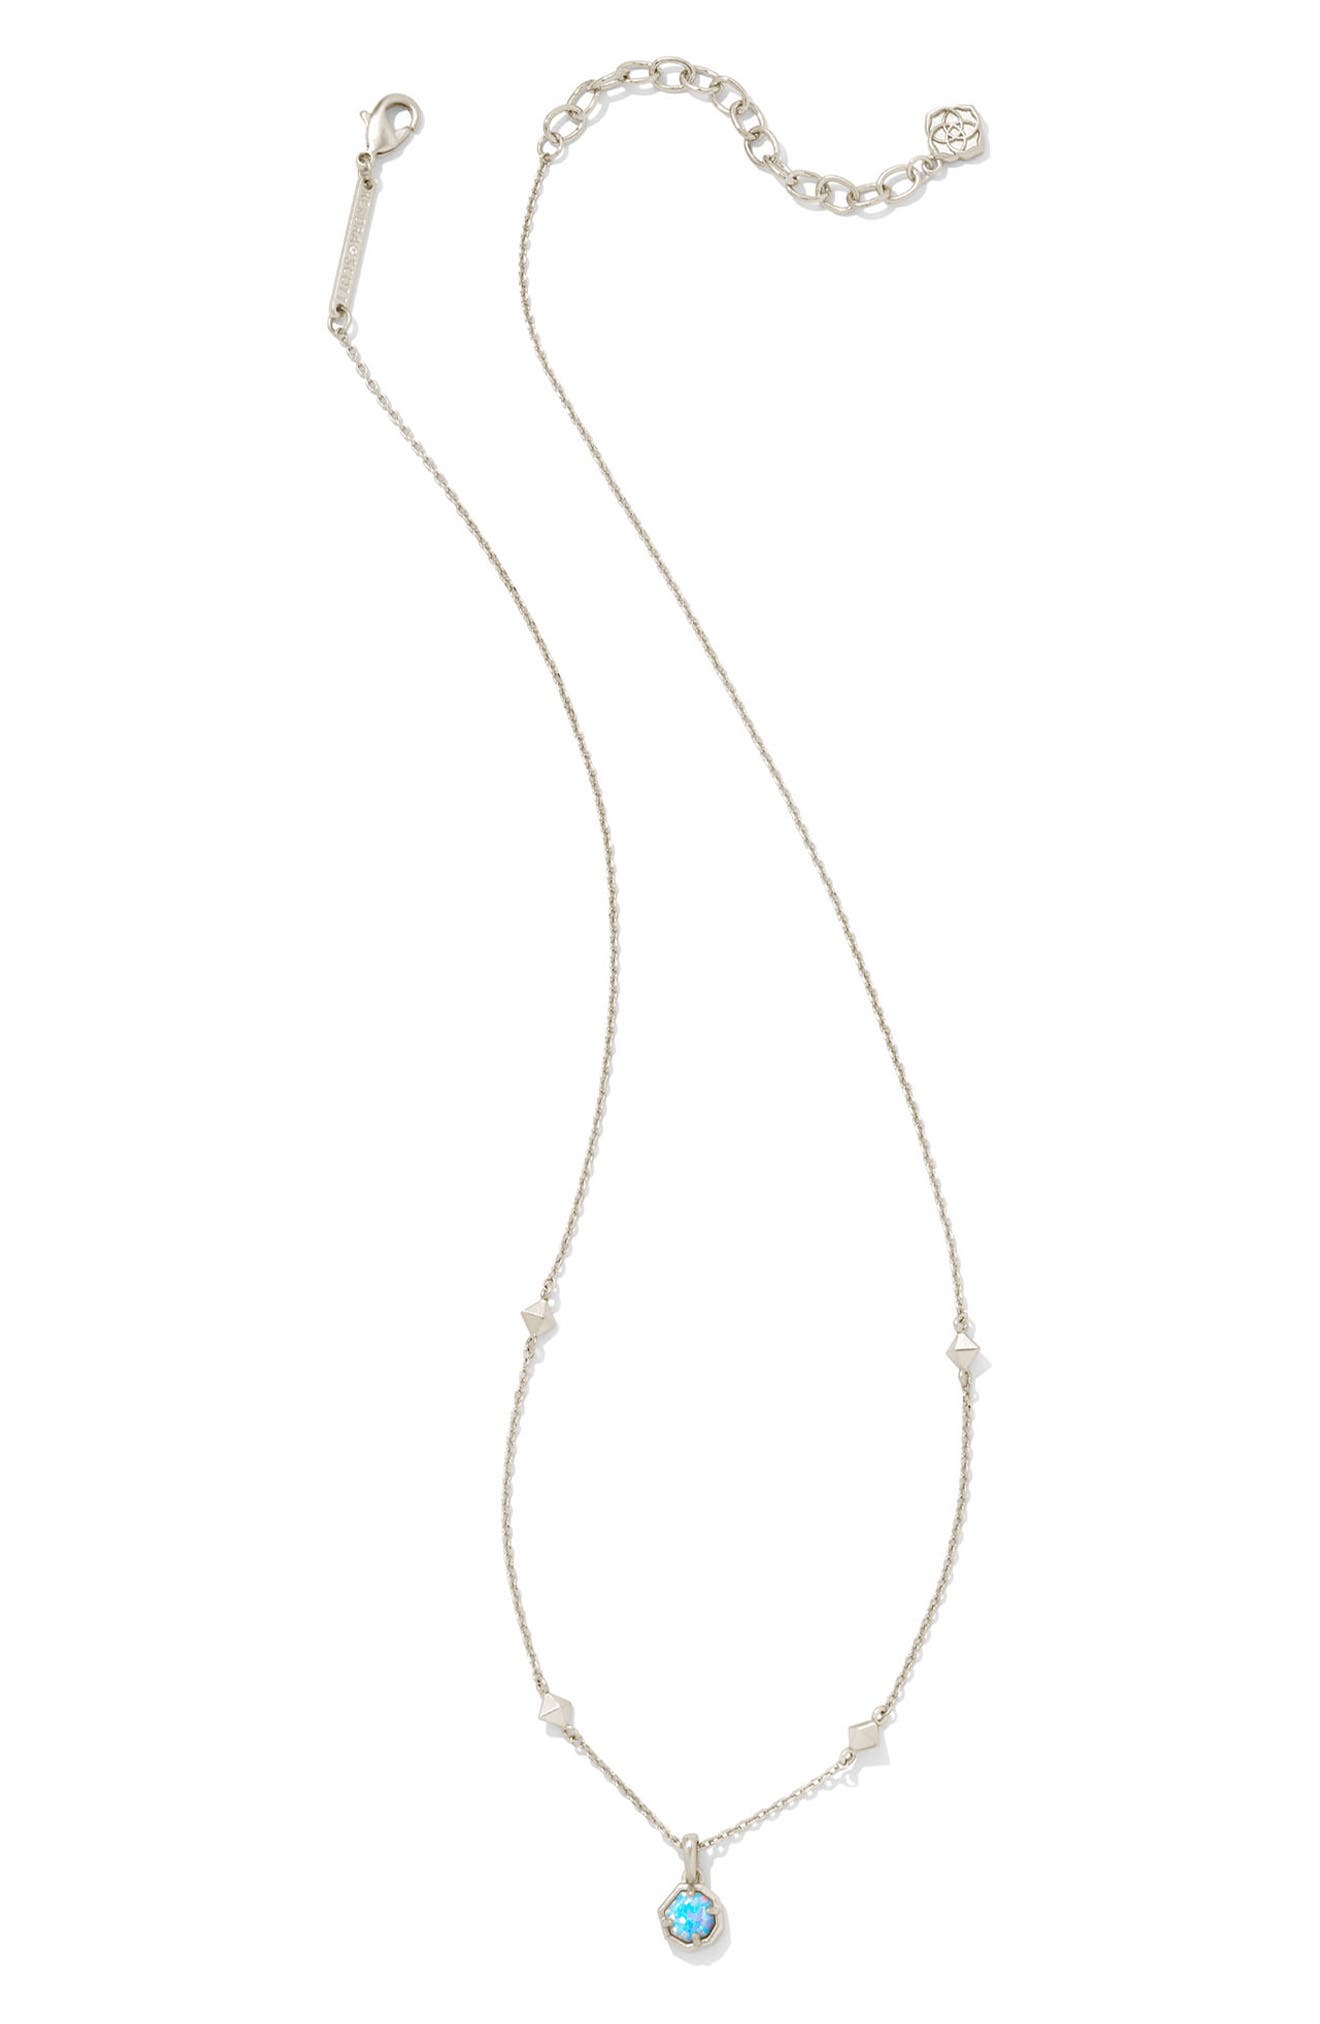 Jane.Basch 1 1/2 Rhodium Plated Brass Dream Charm Necklace with CZ Accent